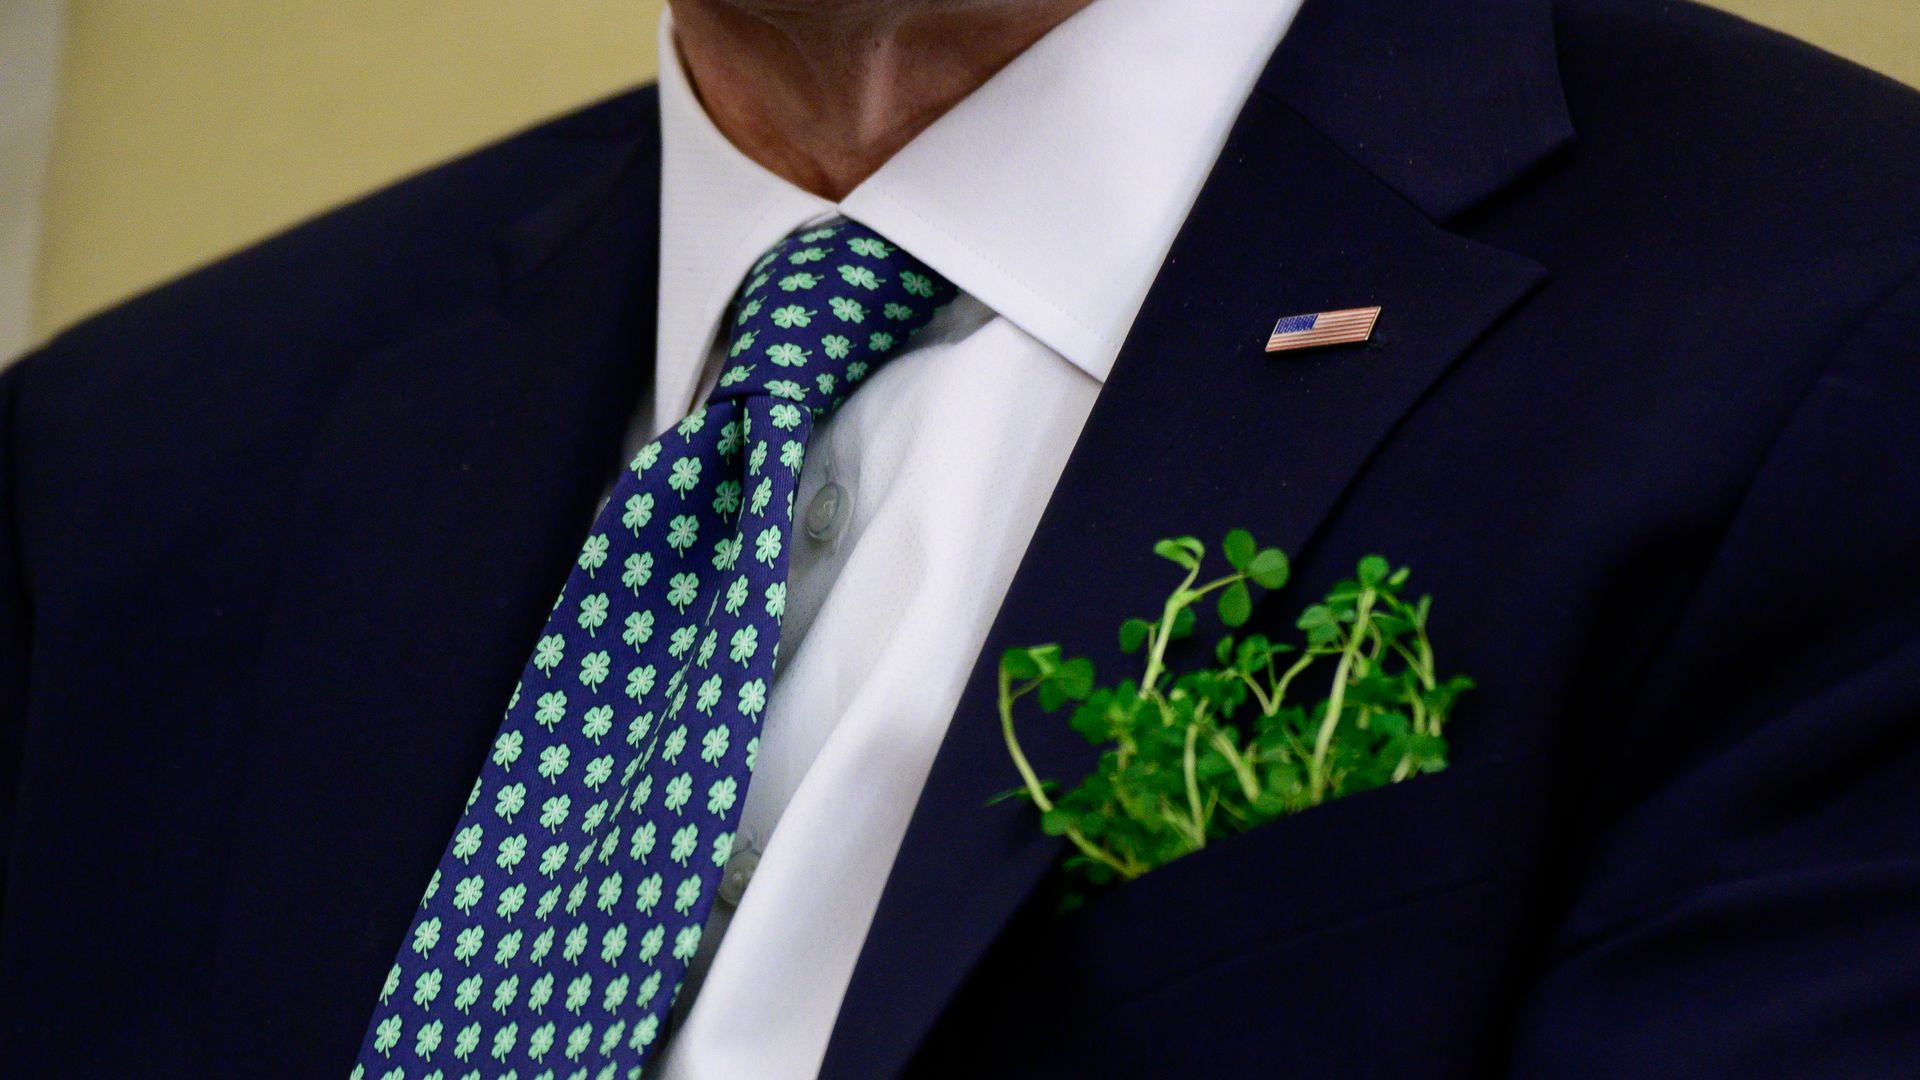 President Biden is seen wearing a shamrock tie and with live shamrocks stuffed in his breast pocket.